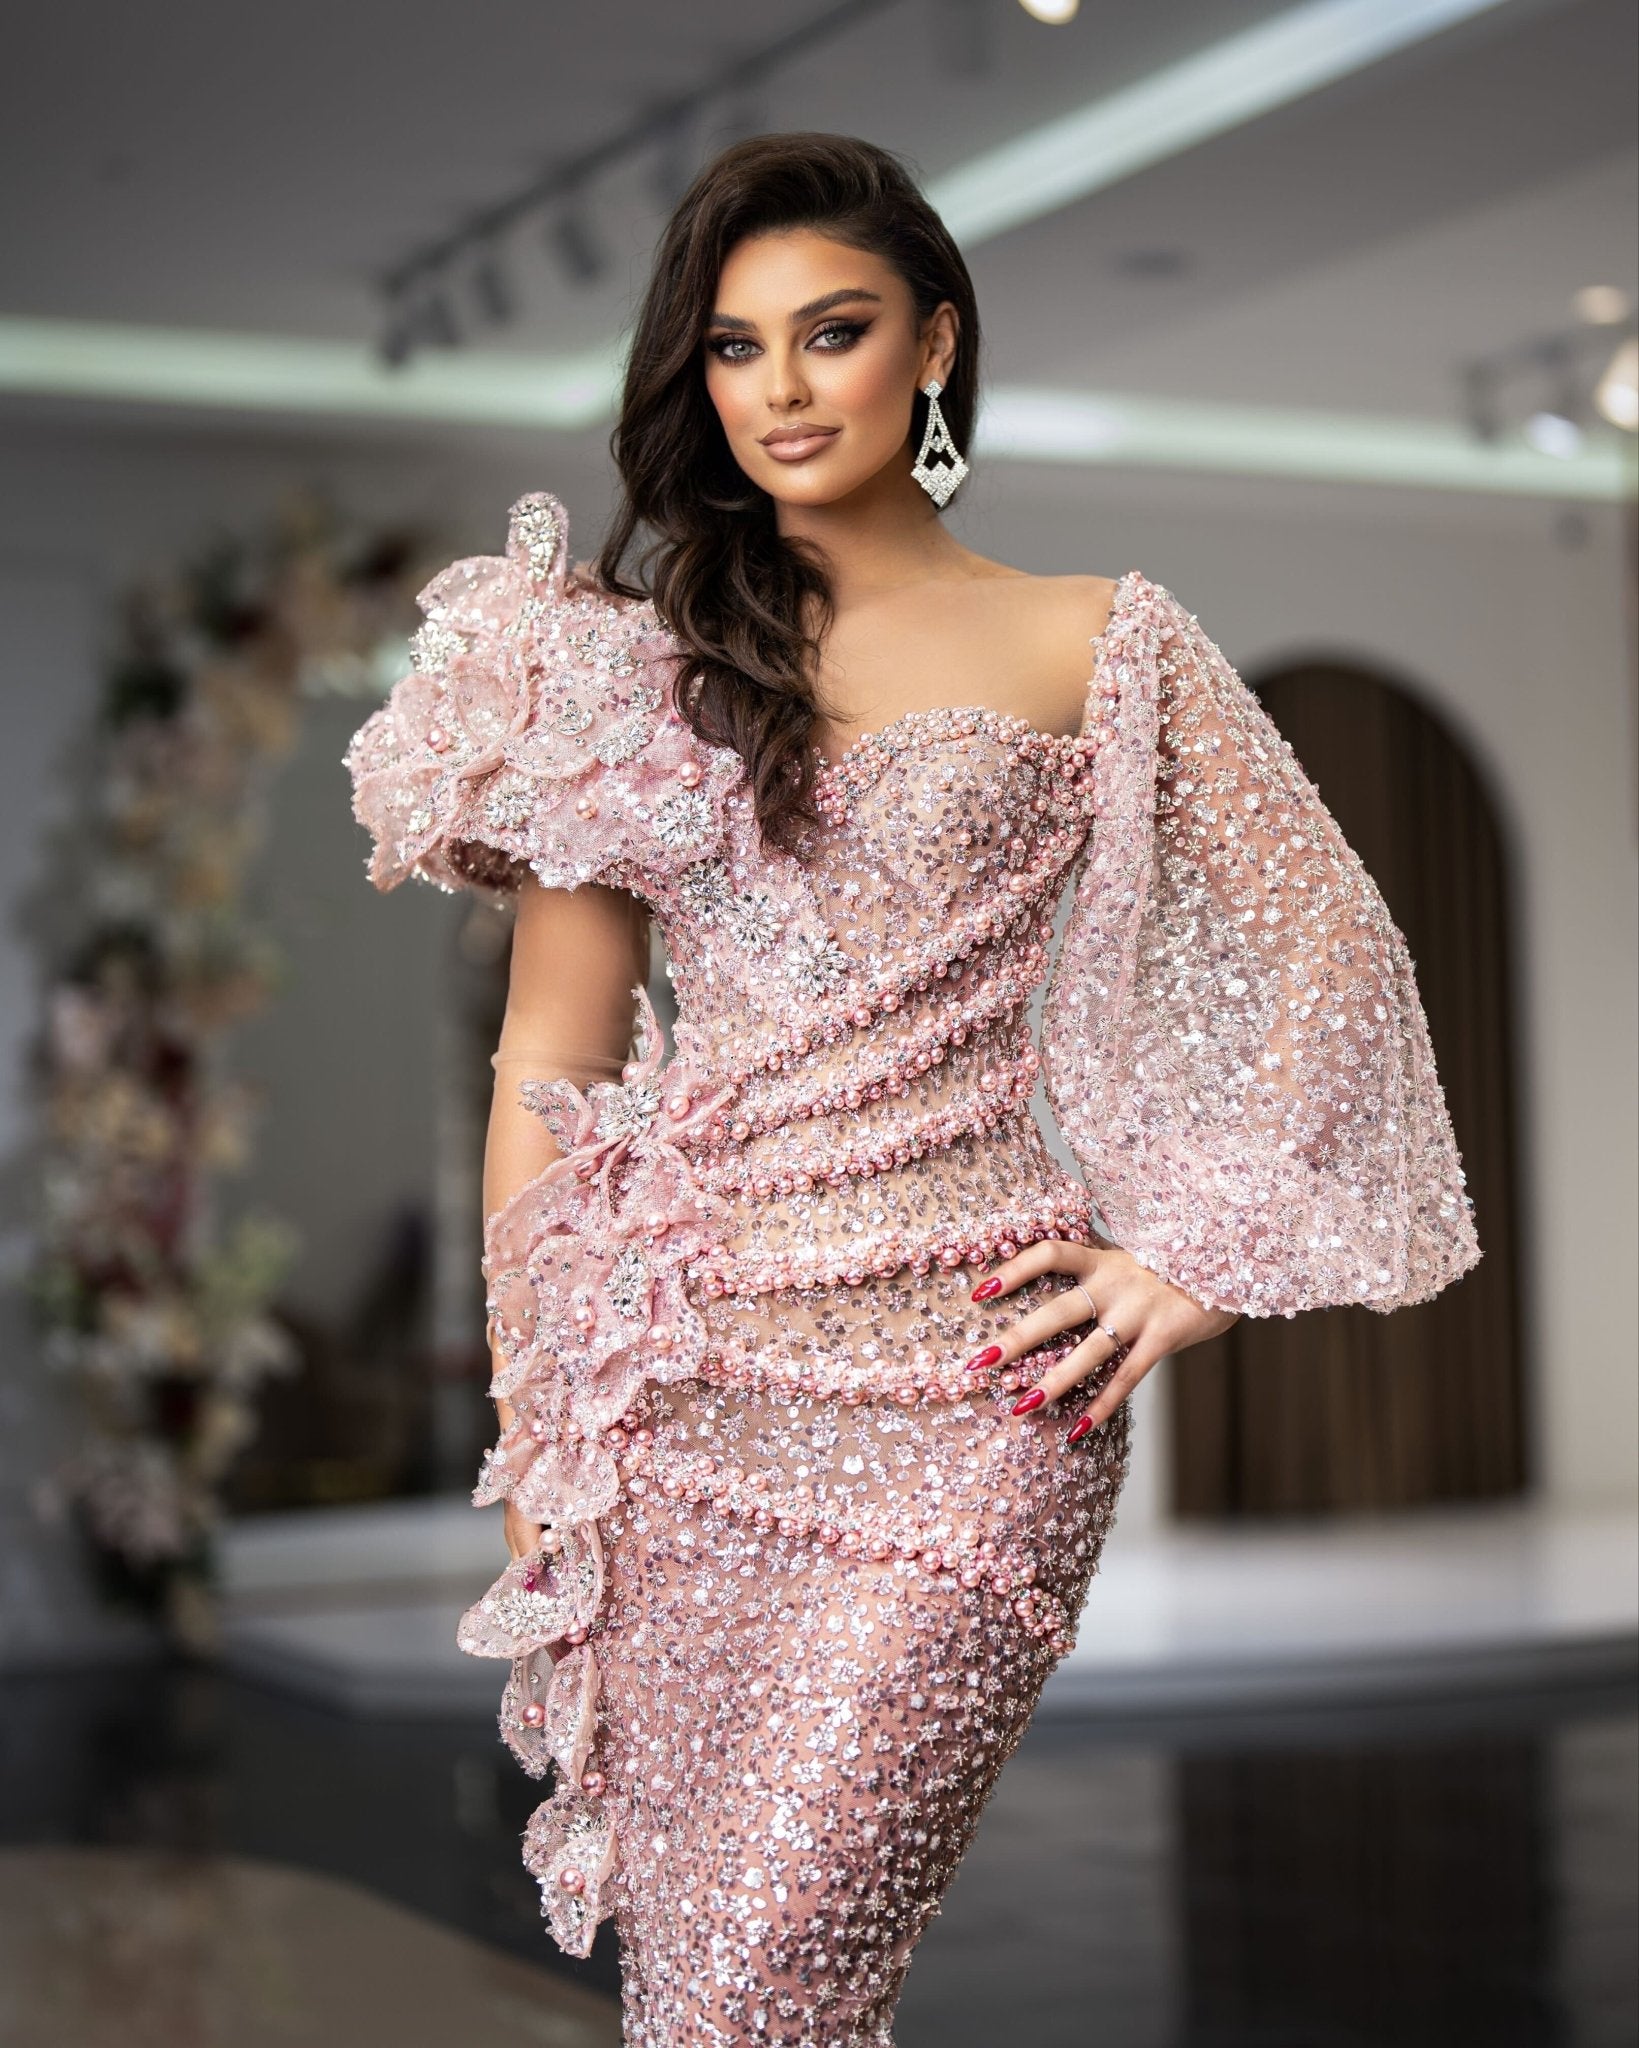 Beautiful Party Wear Light Pink Gown | Latest Kurti Designs